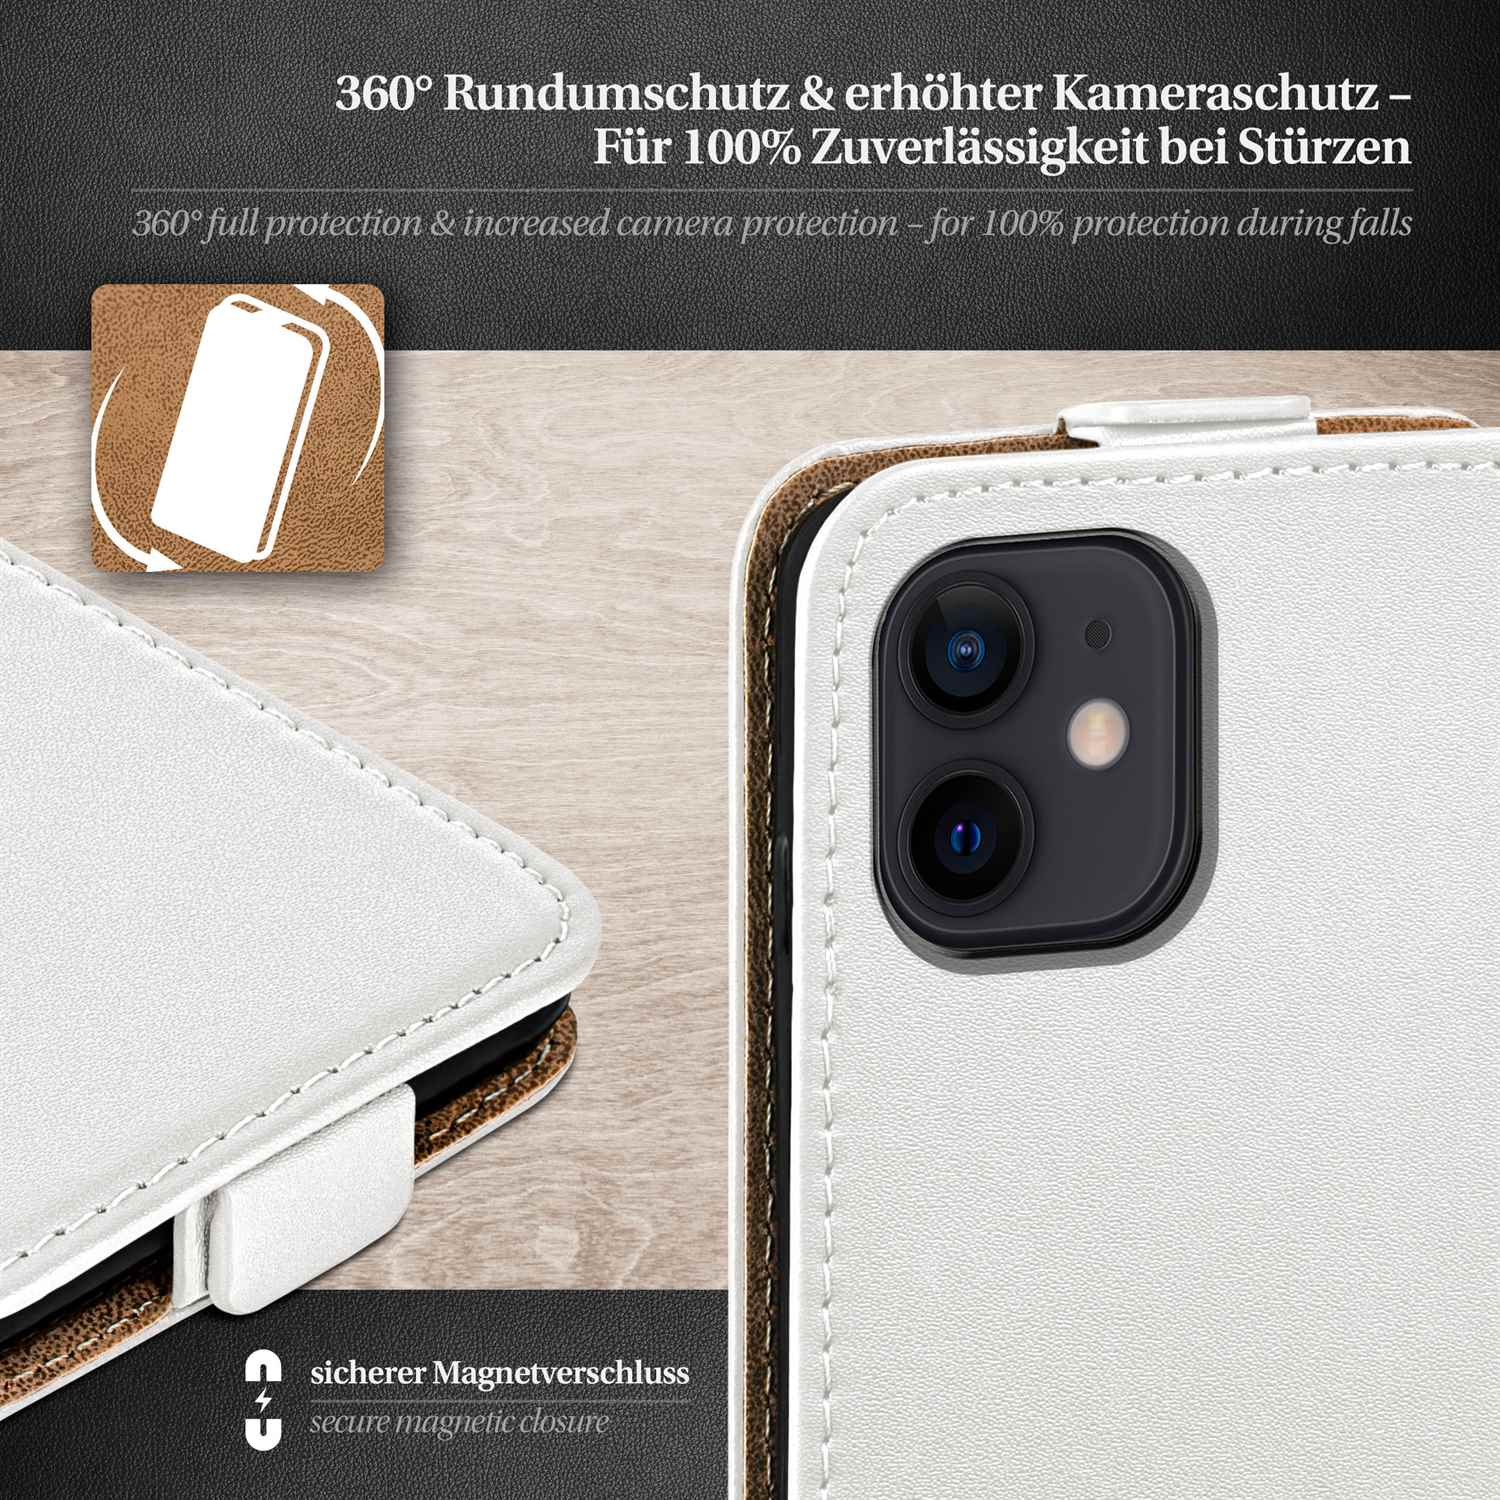 Apple, MOEX Pearl-White iPhone Flip Cover, Case, 12, Flip